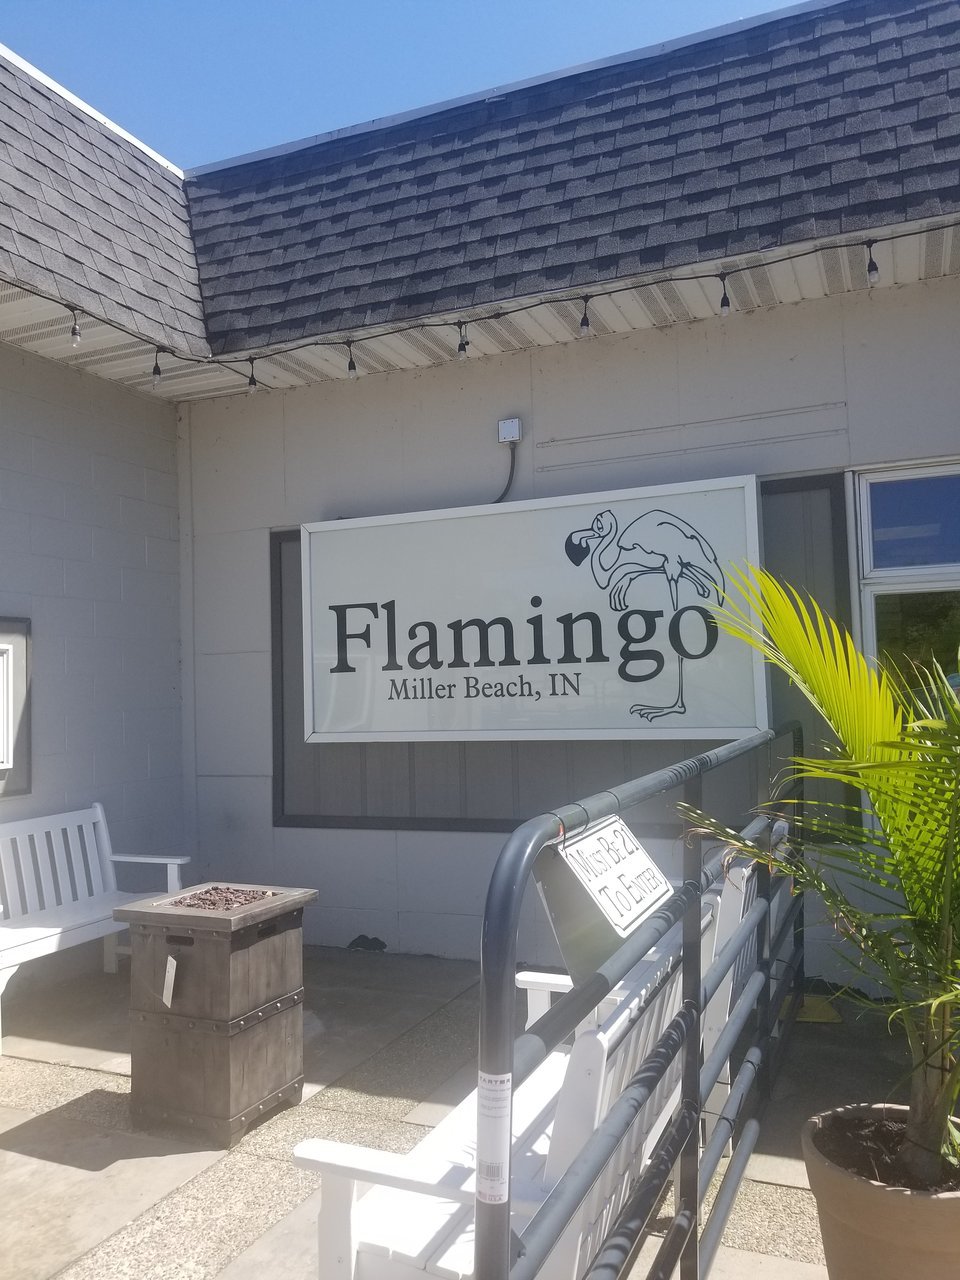 Flamingo Pizza of Miller